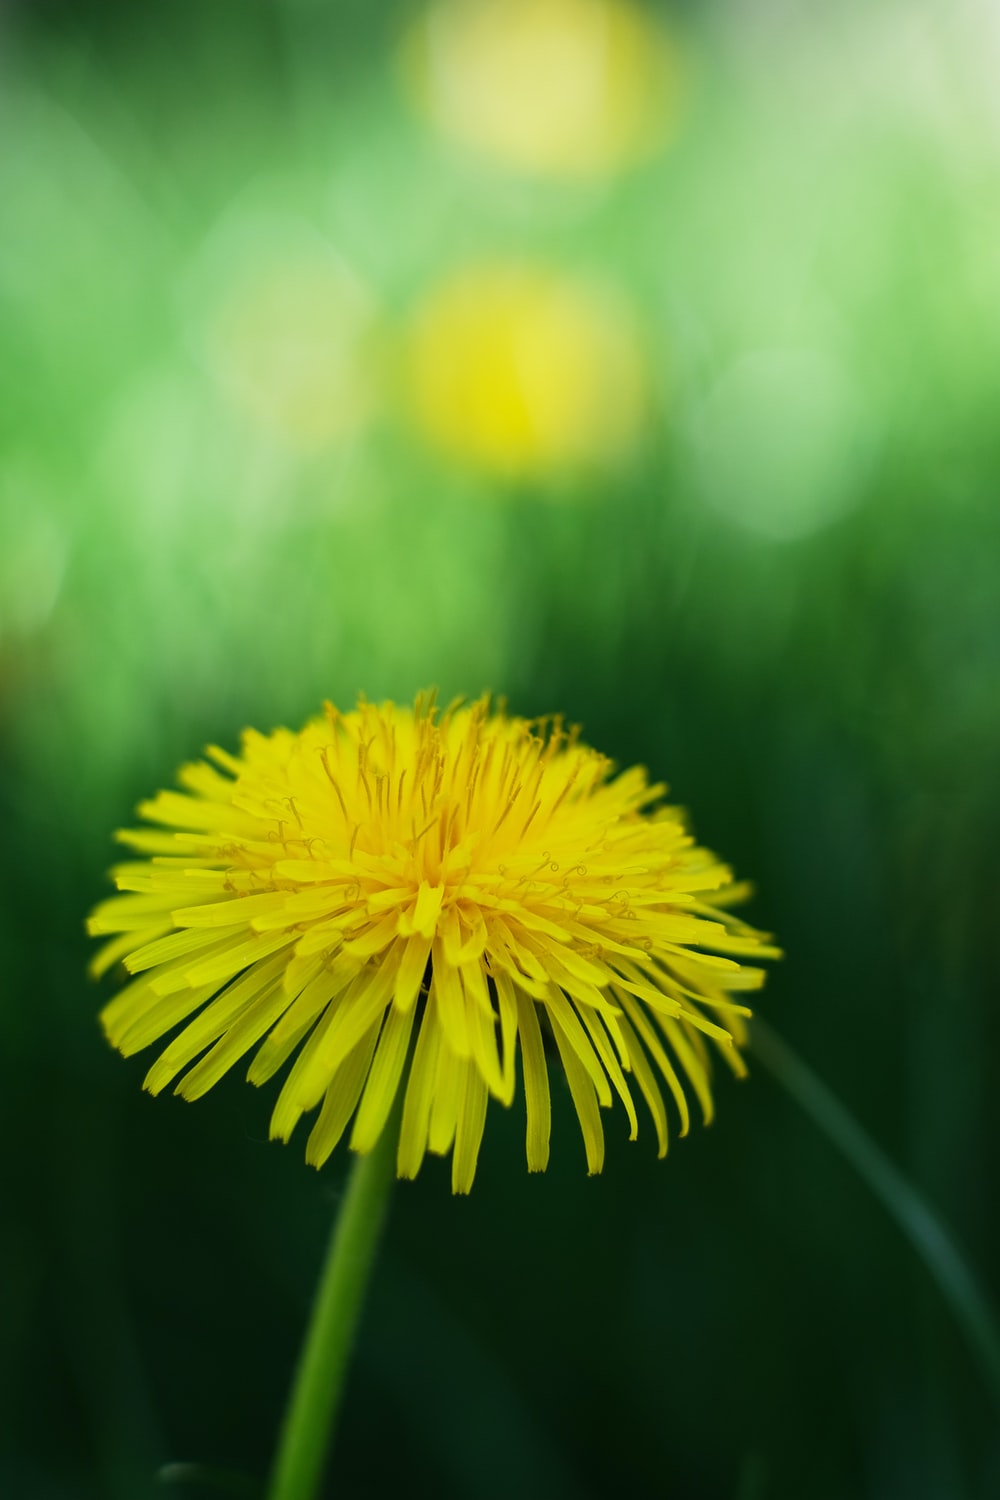 Dandelion Flower Picture. Download Free Image